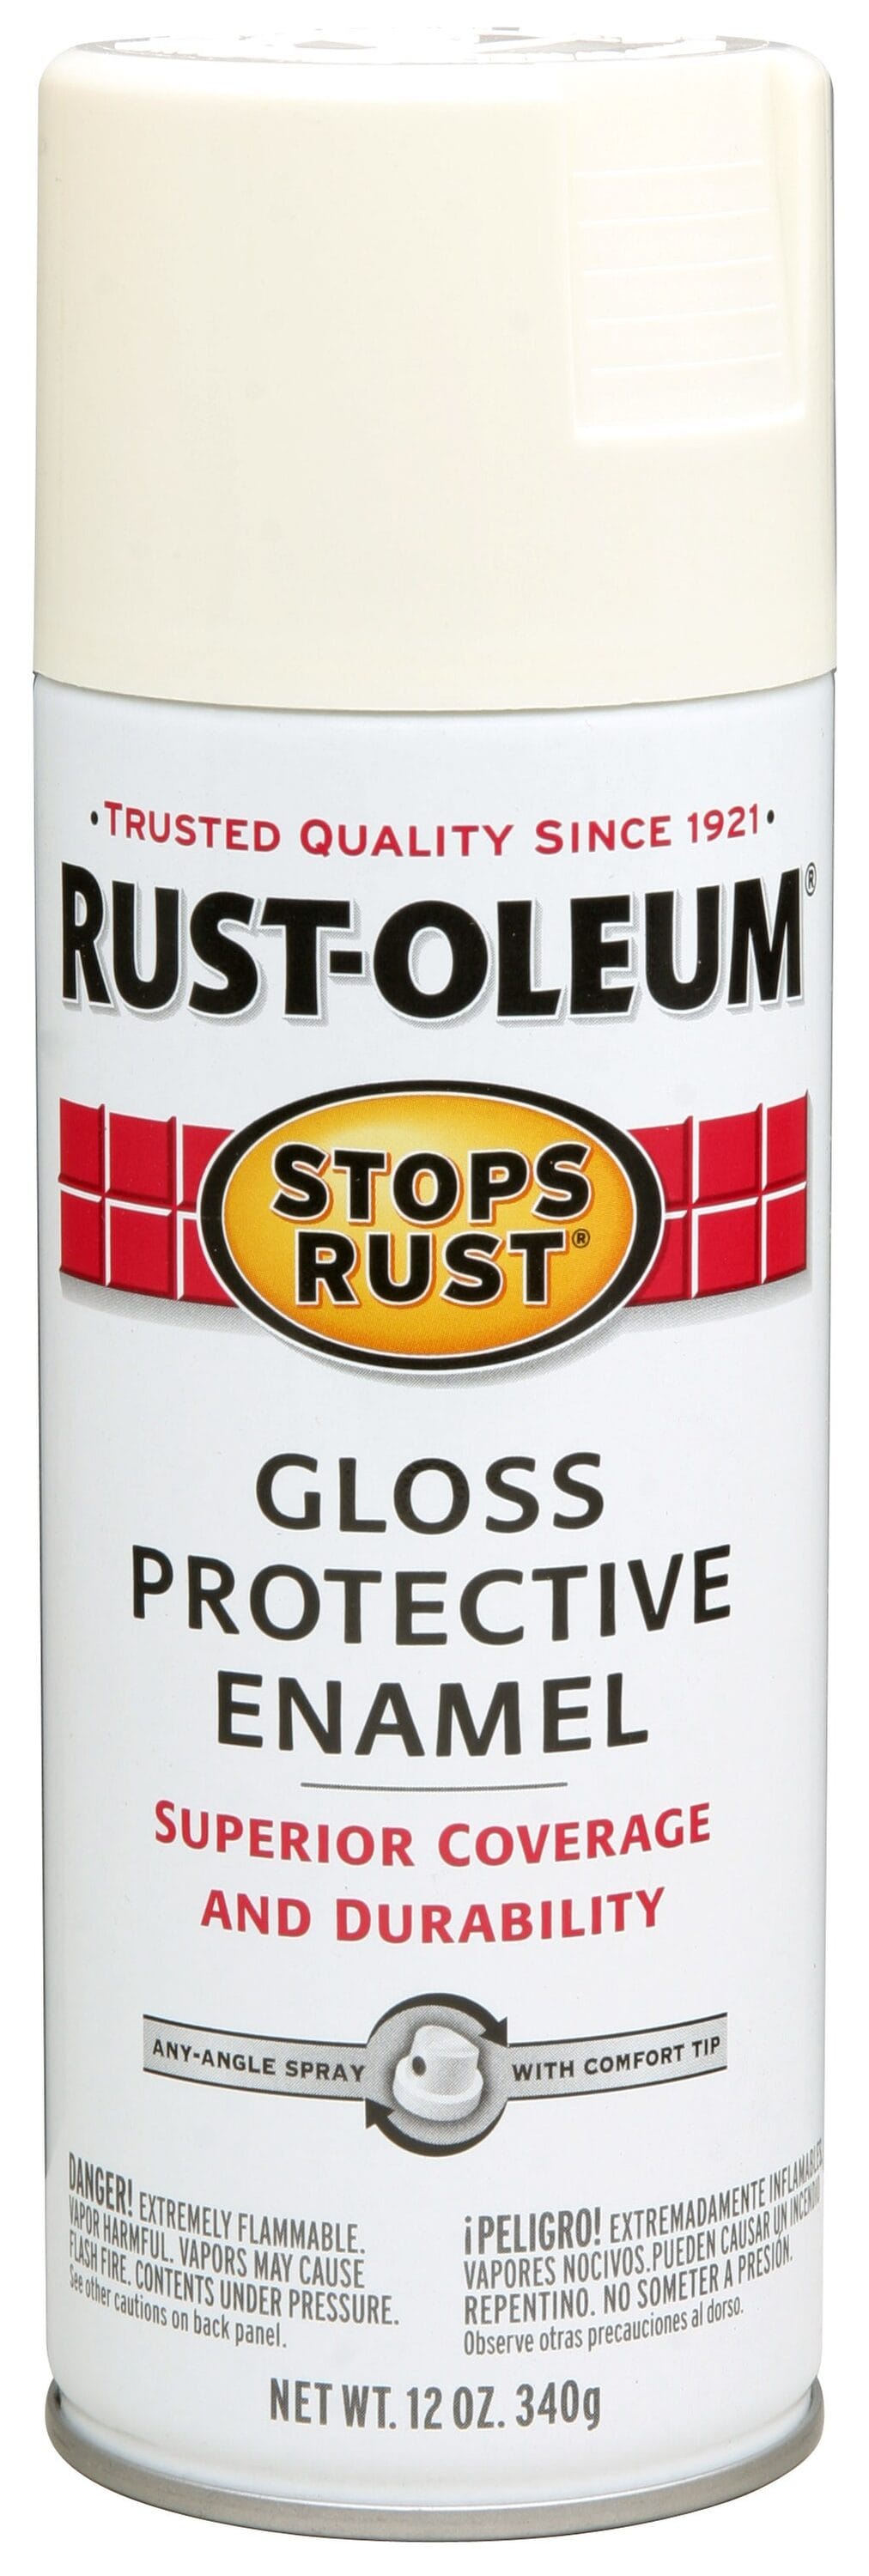 Rust-Oleum Stops Rust 1 Qt. Protective Enamel Semi-Gloss White Interior/Exterior Paint (2-Pack)